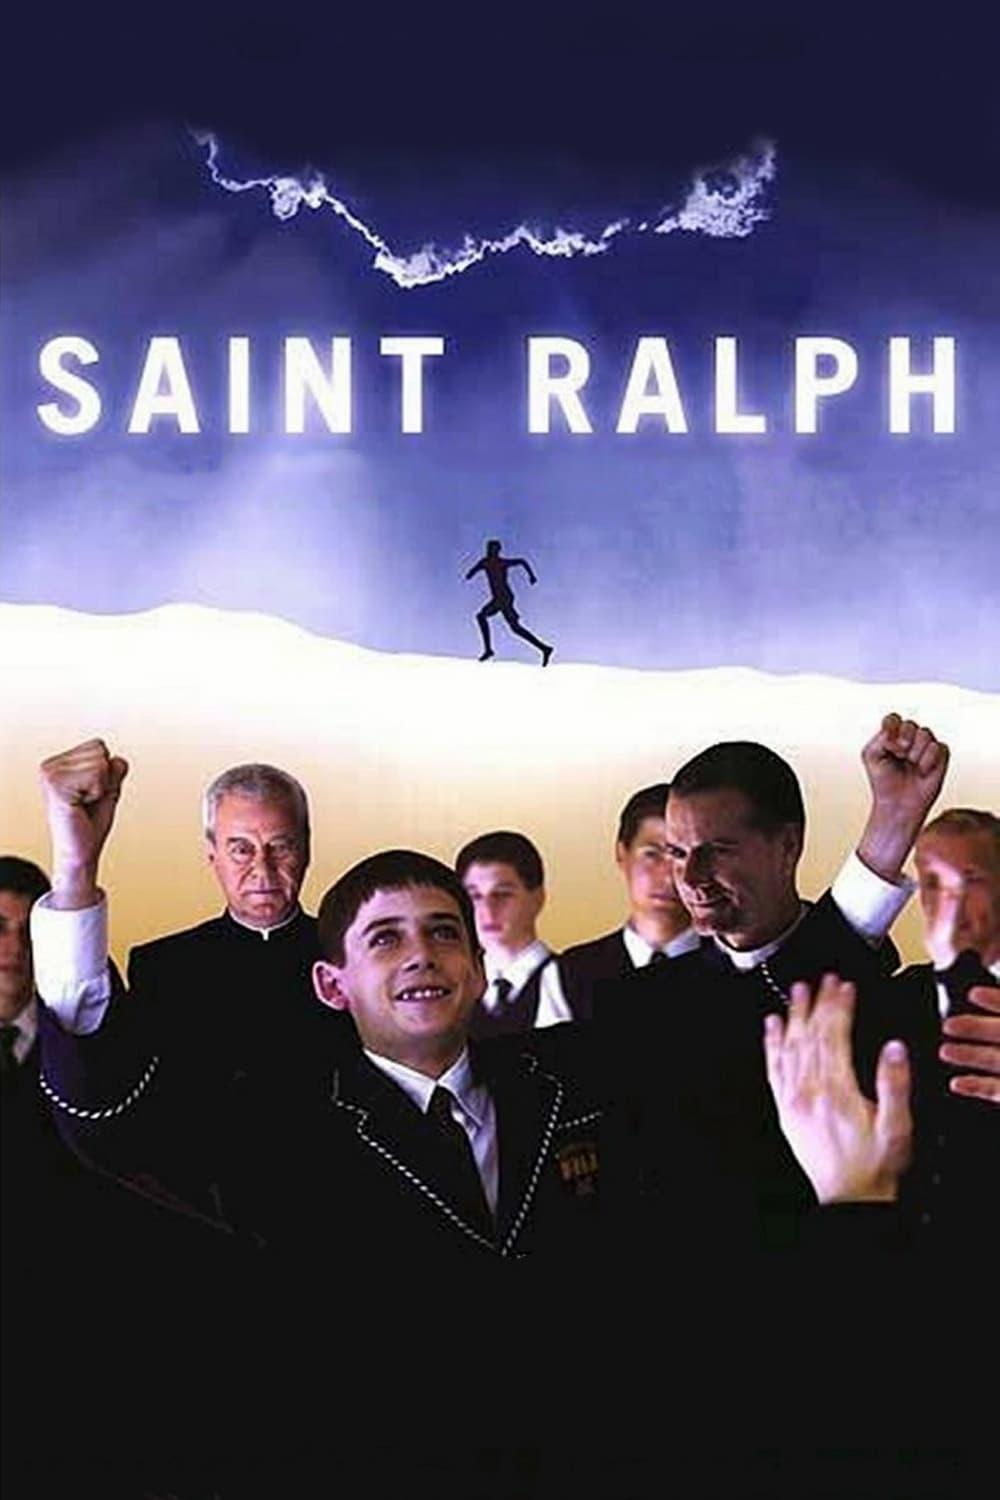 Saint Ralph poster